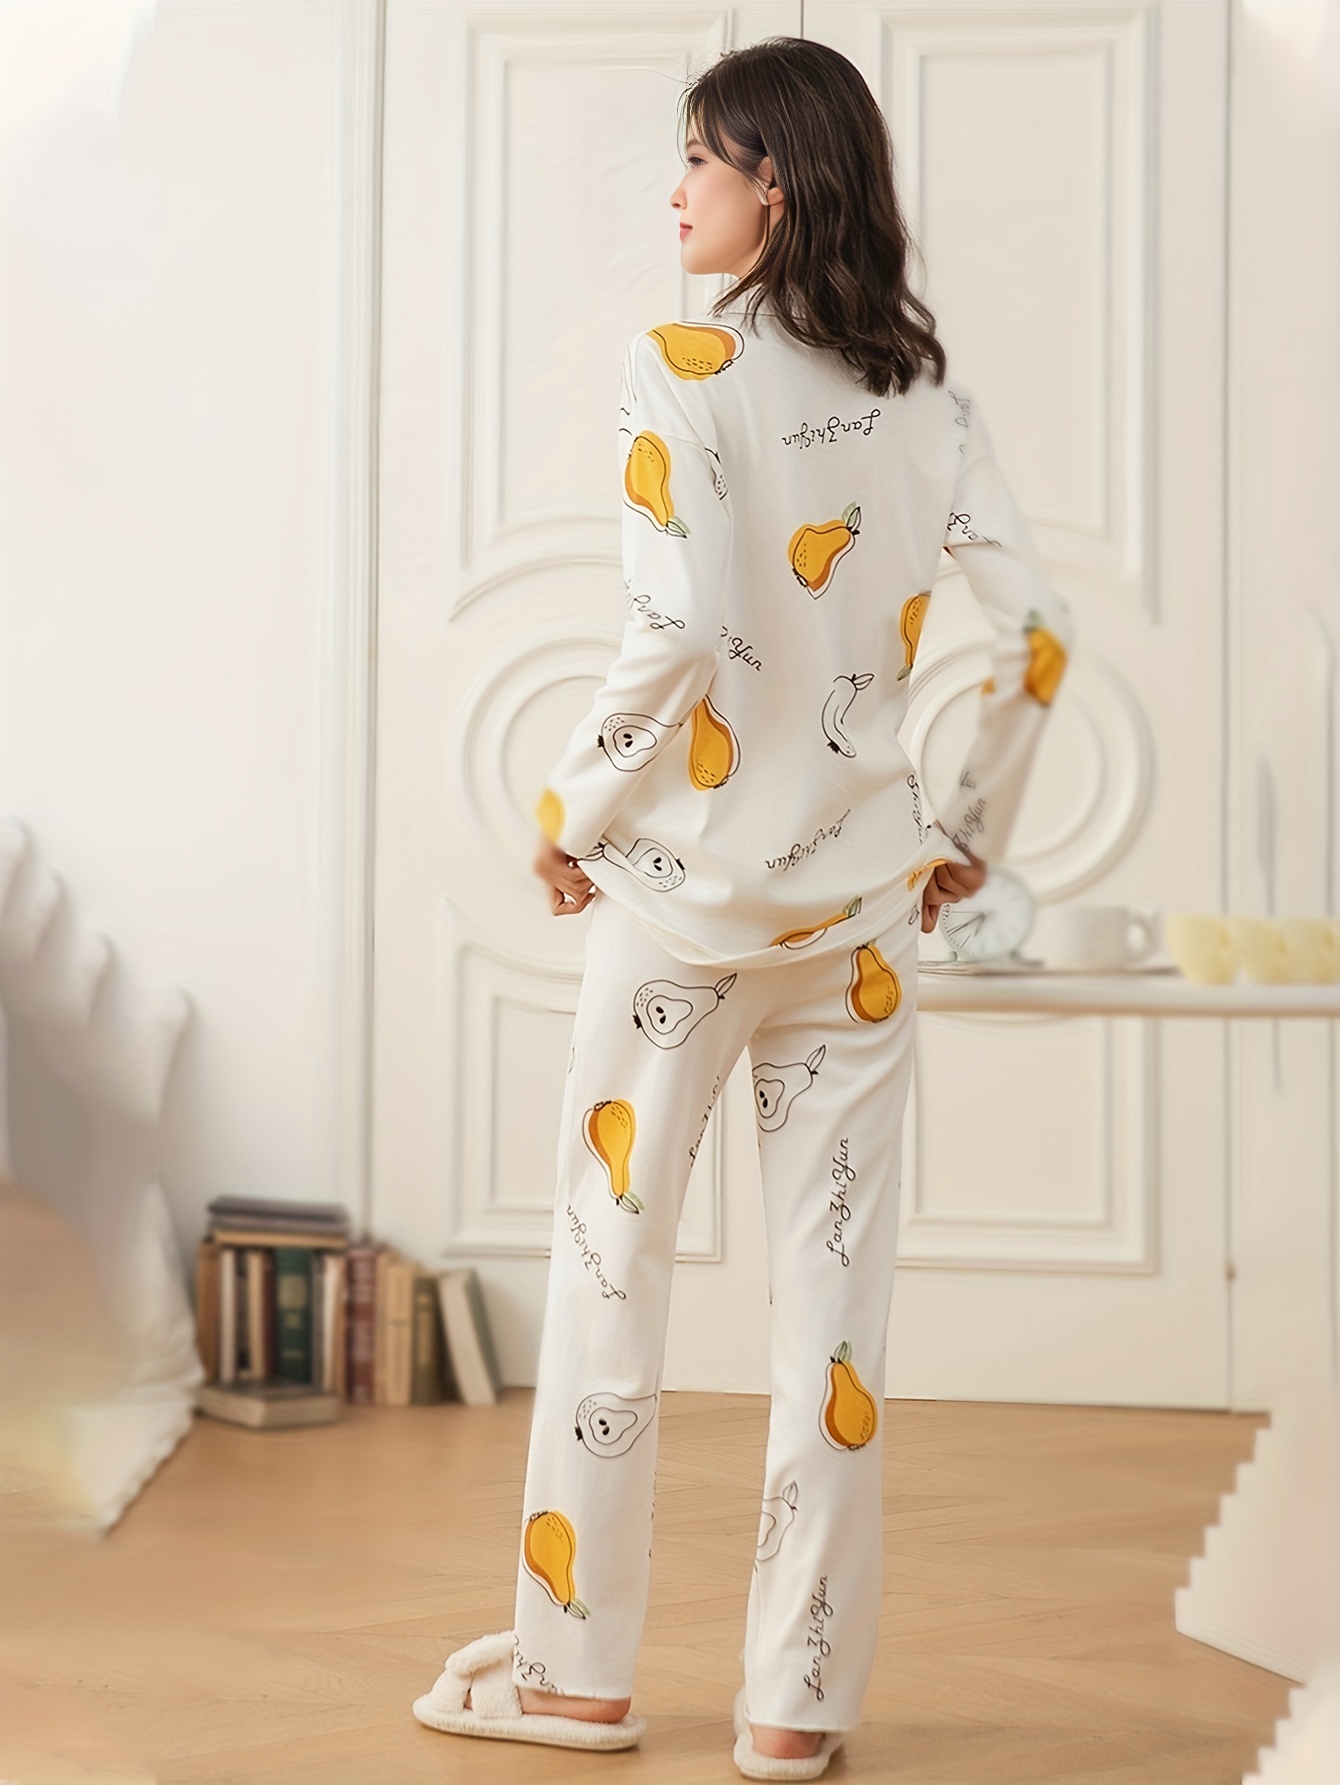 Maternity Pyjamas & Loungewear, Nursing Sleepwear